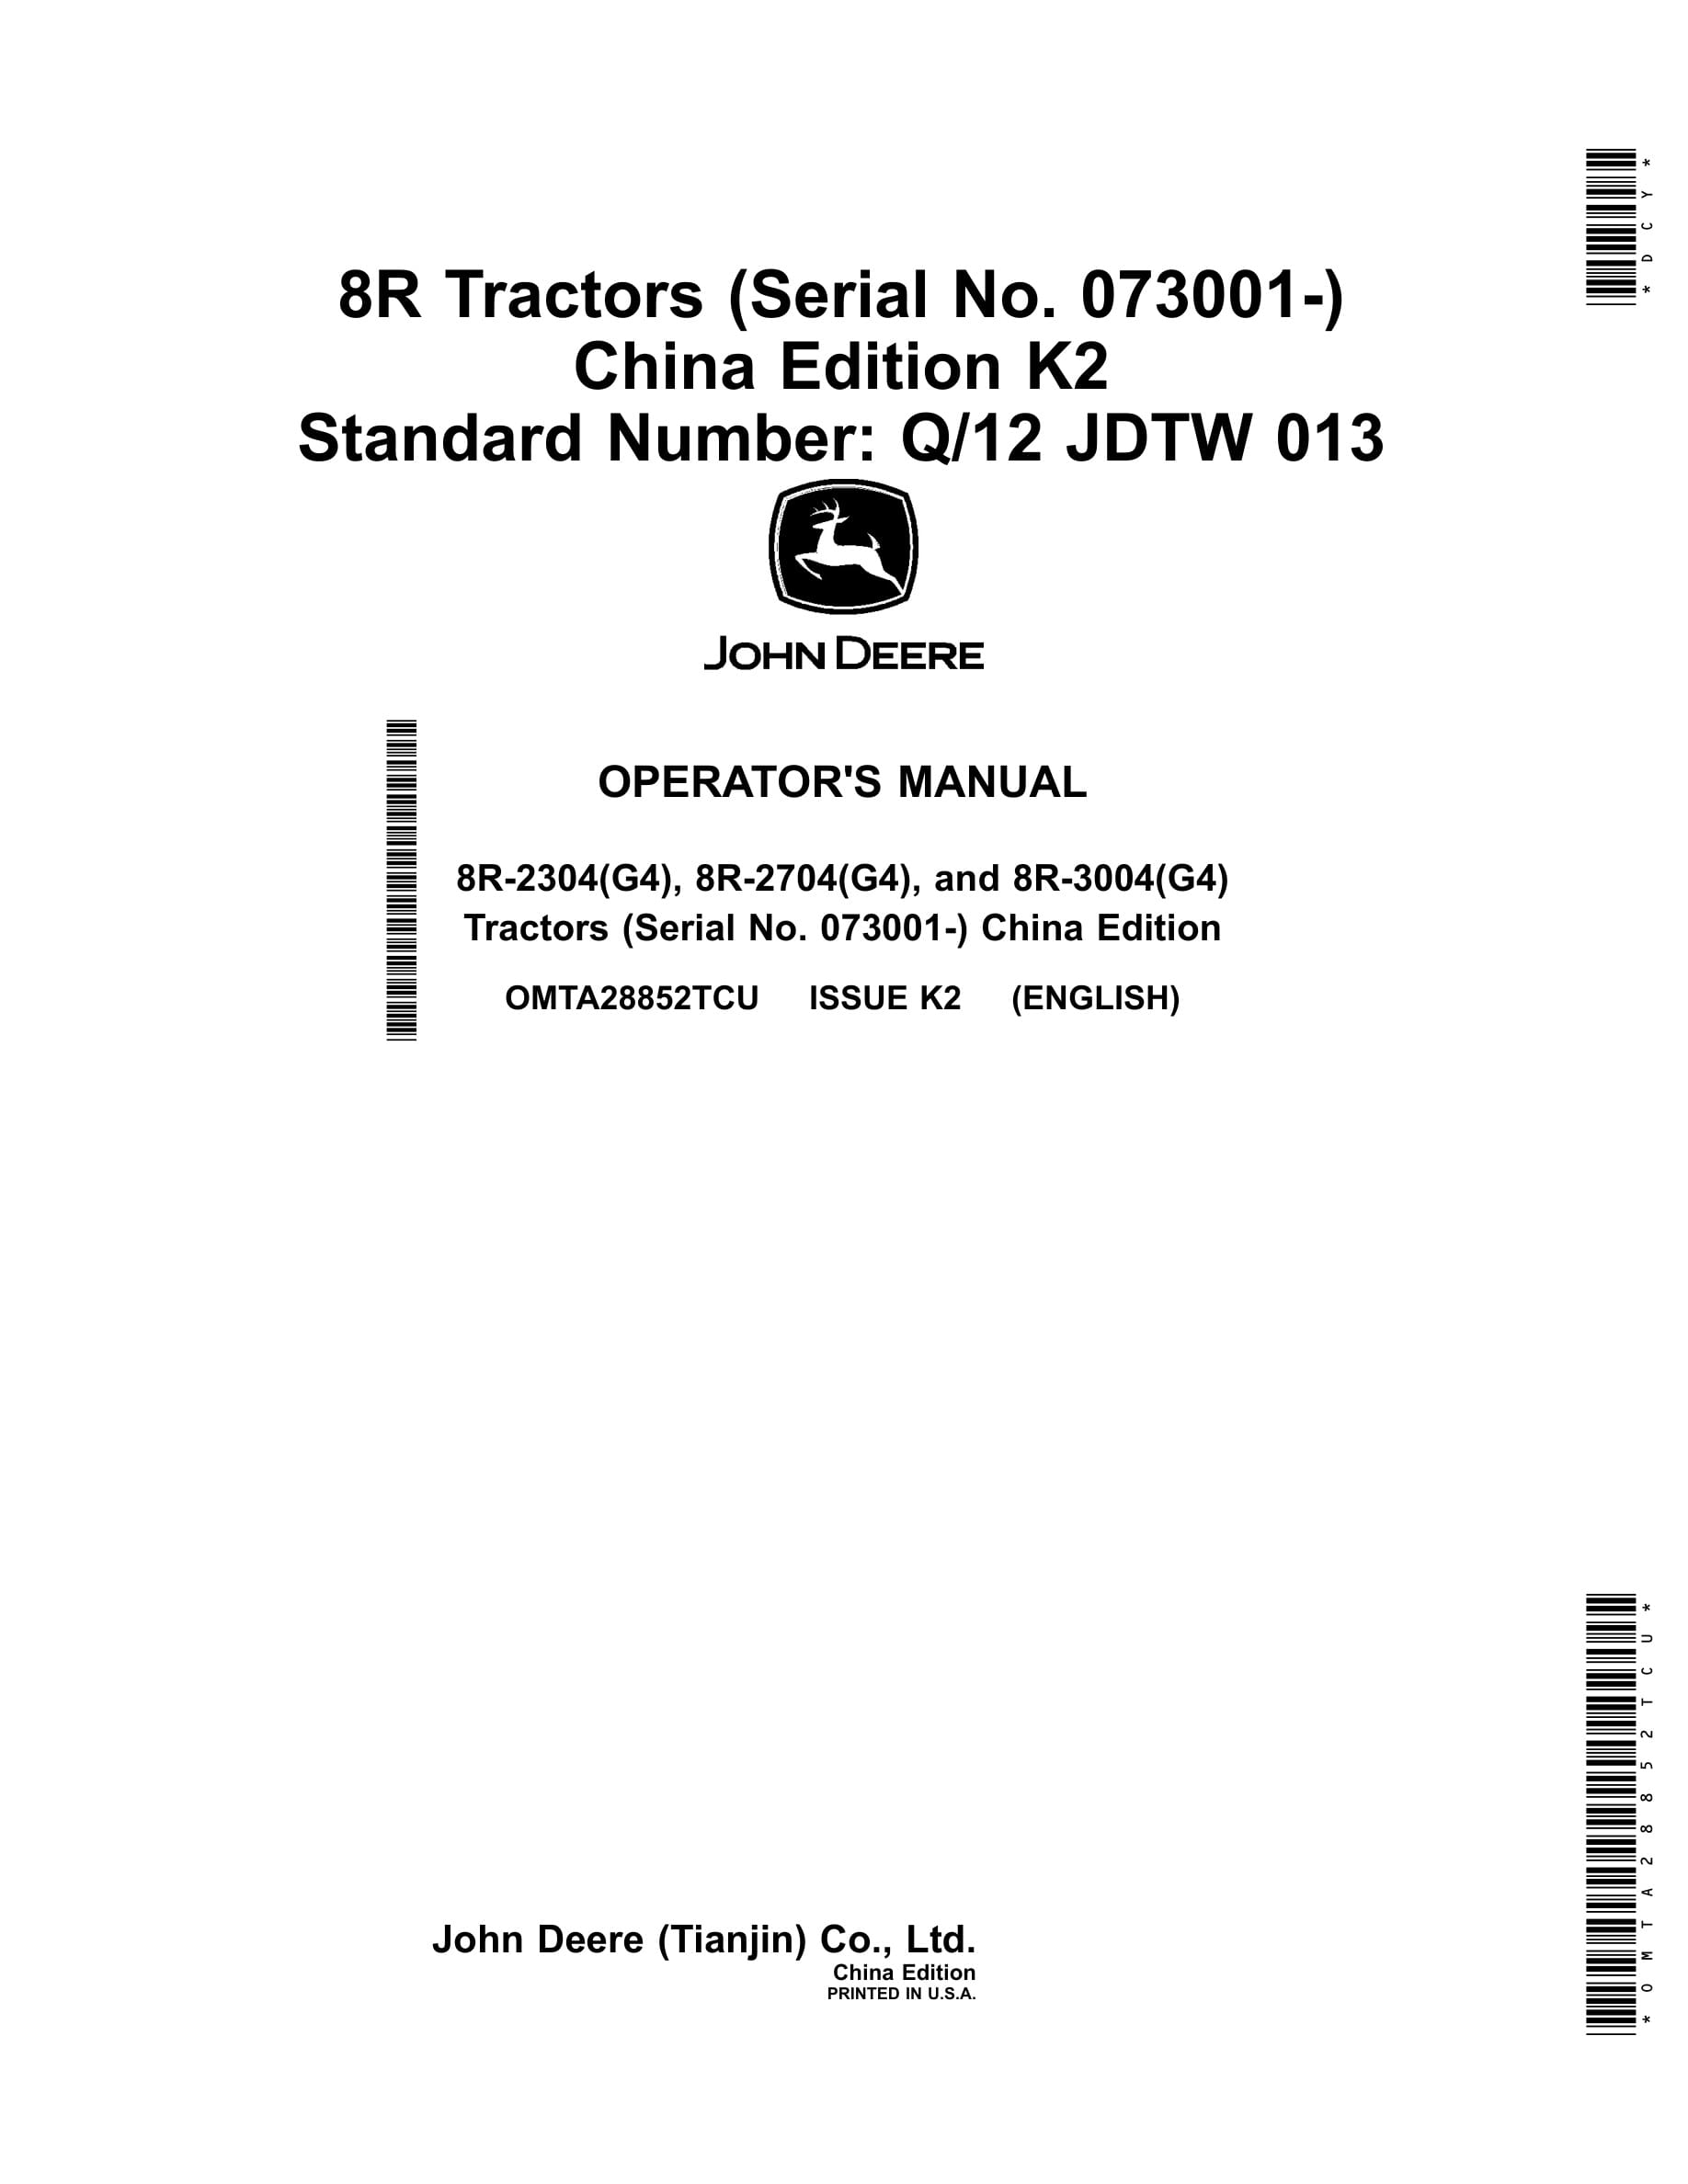 John Deere 8R-2304(G4), 8R-2704(G4), and 8R-3004(G4) Tractors Operator Manuals OMTA28852TCU-1